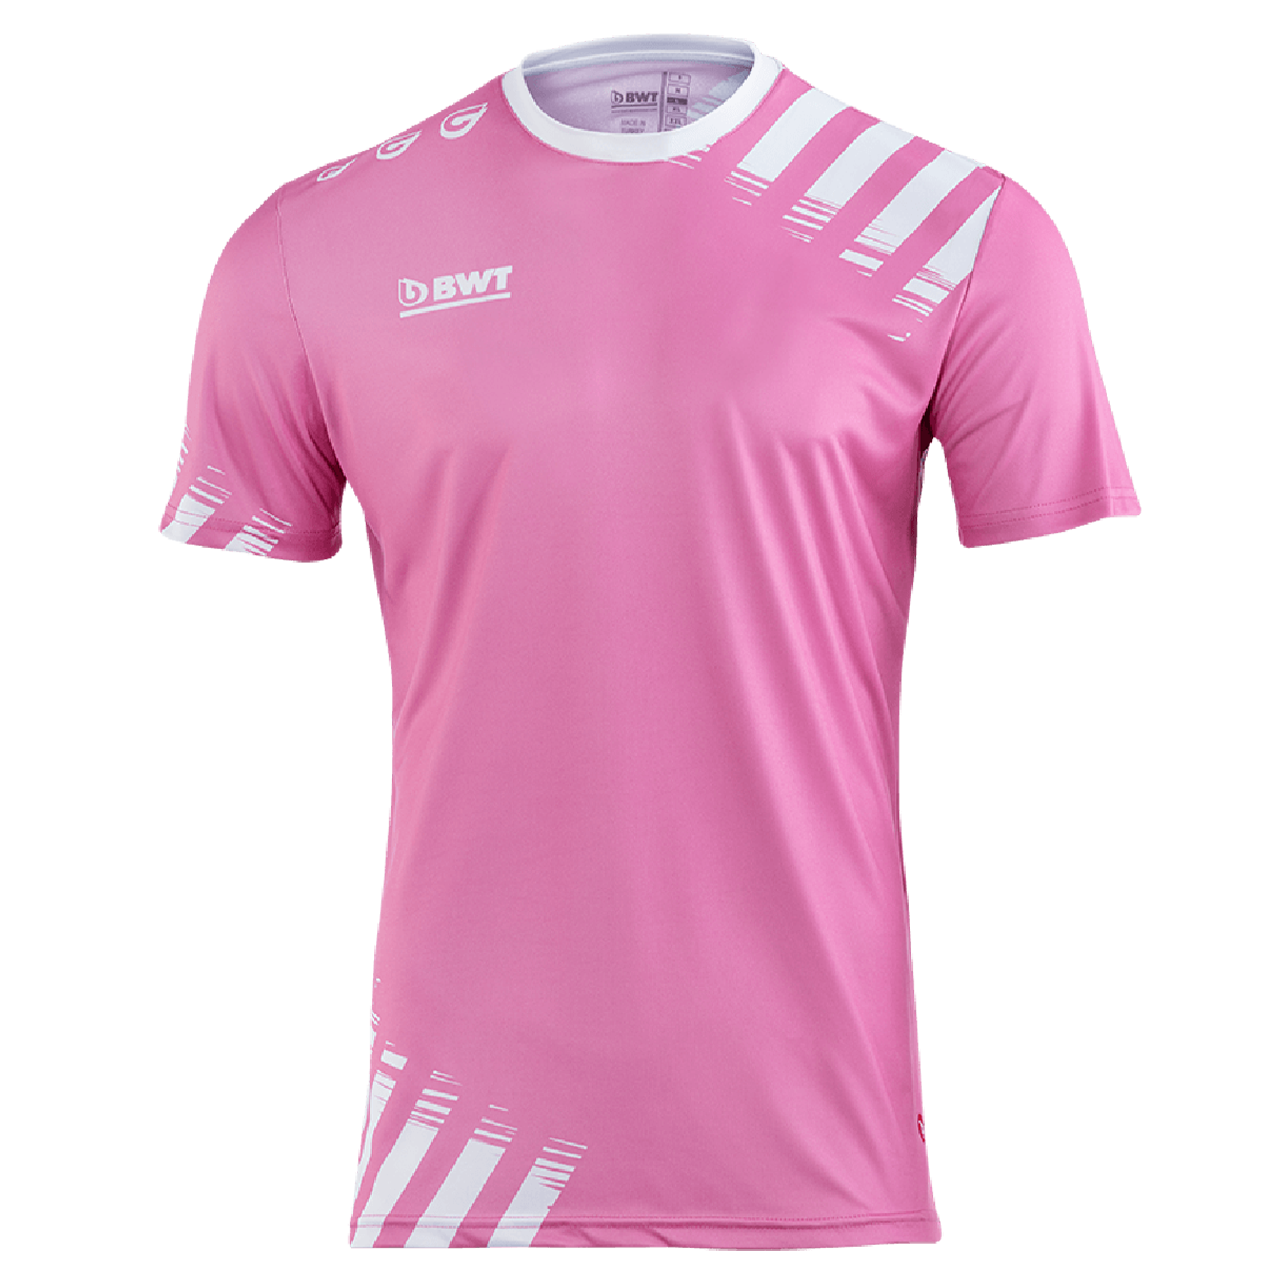 BWT One Football Shirt Maglietta rosa anteriore